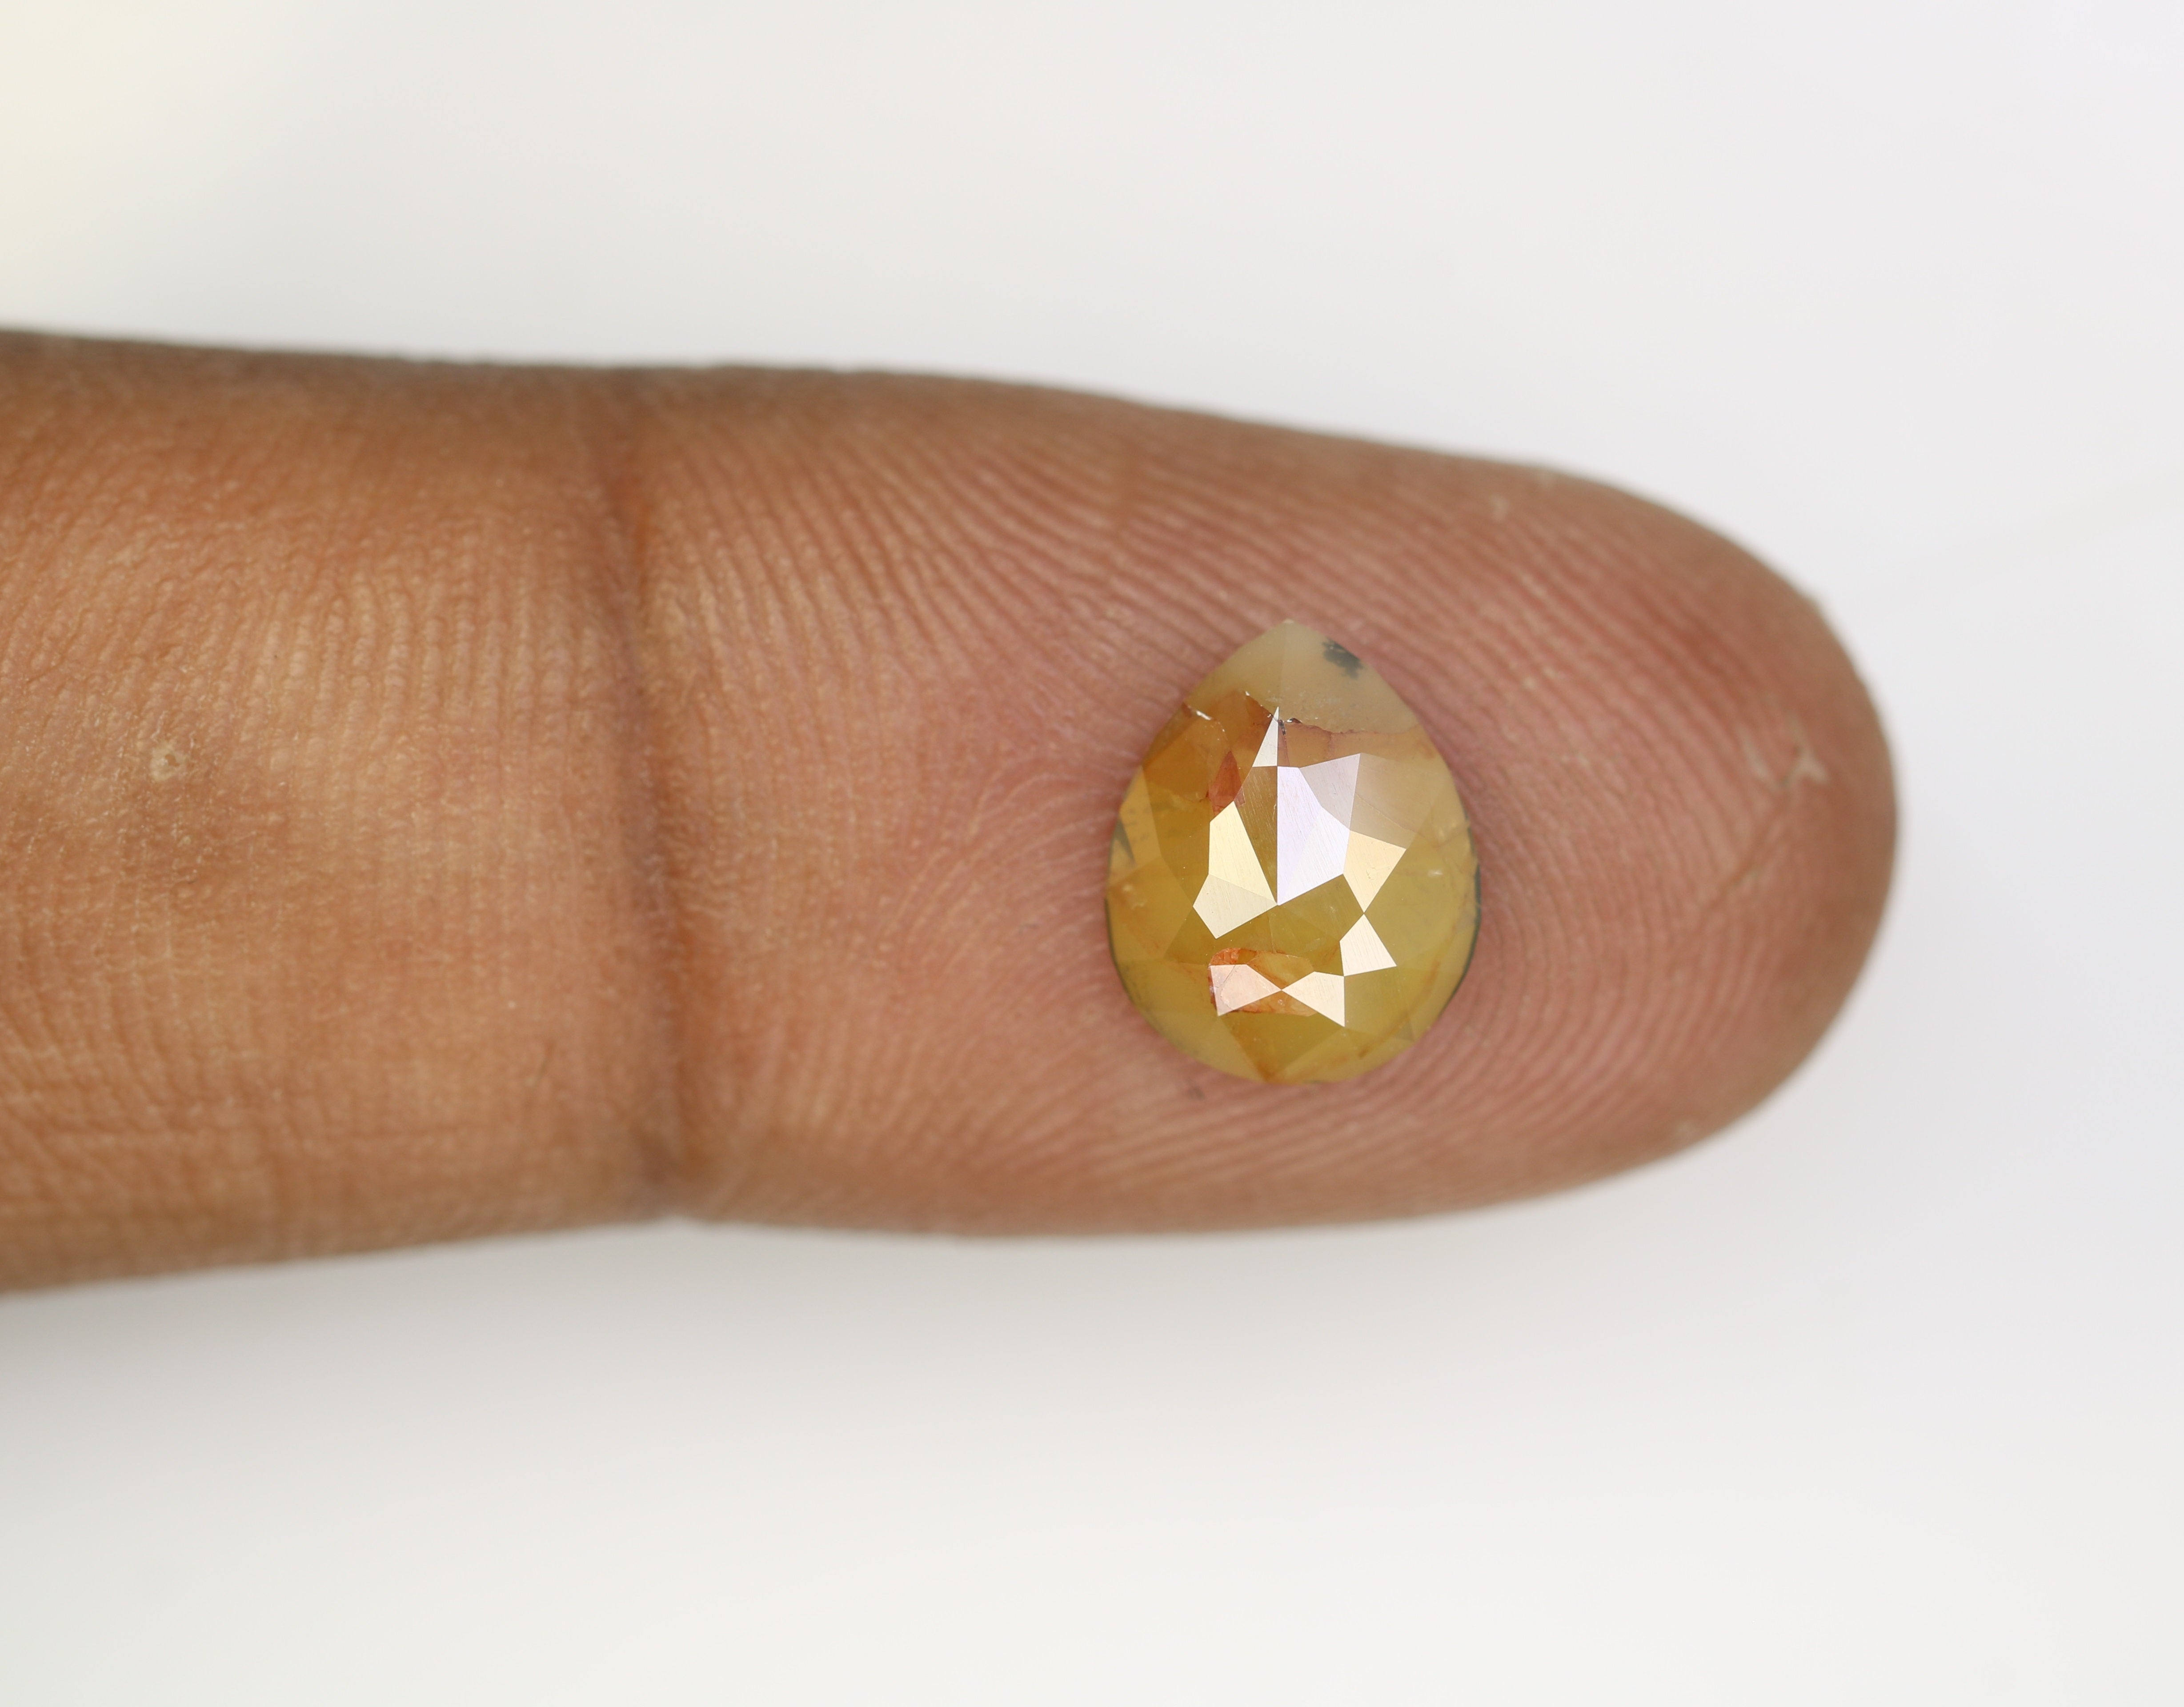 1.60 CT Pear Cut Peach Diamond For Engagement Ring